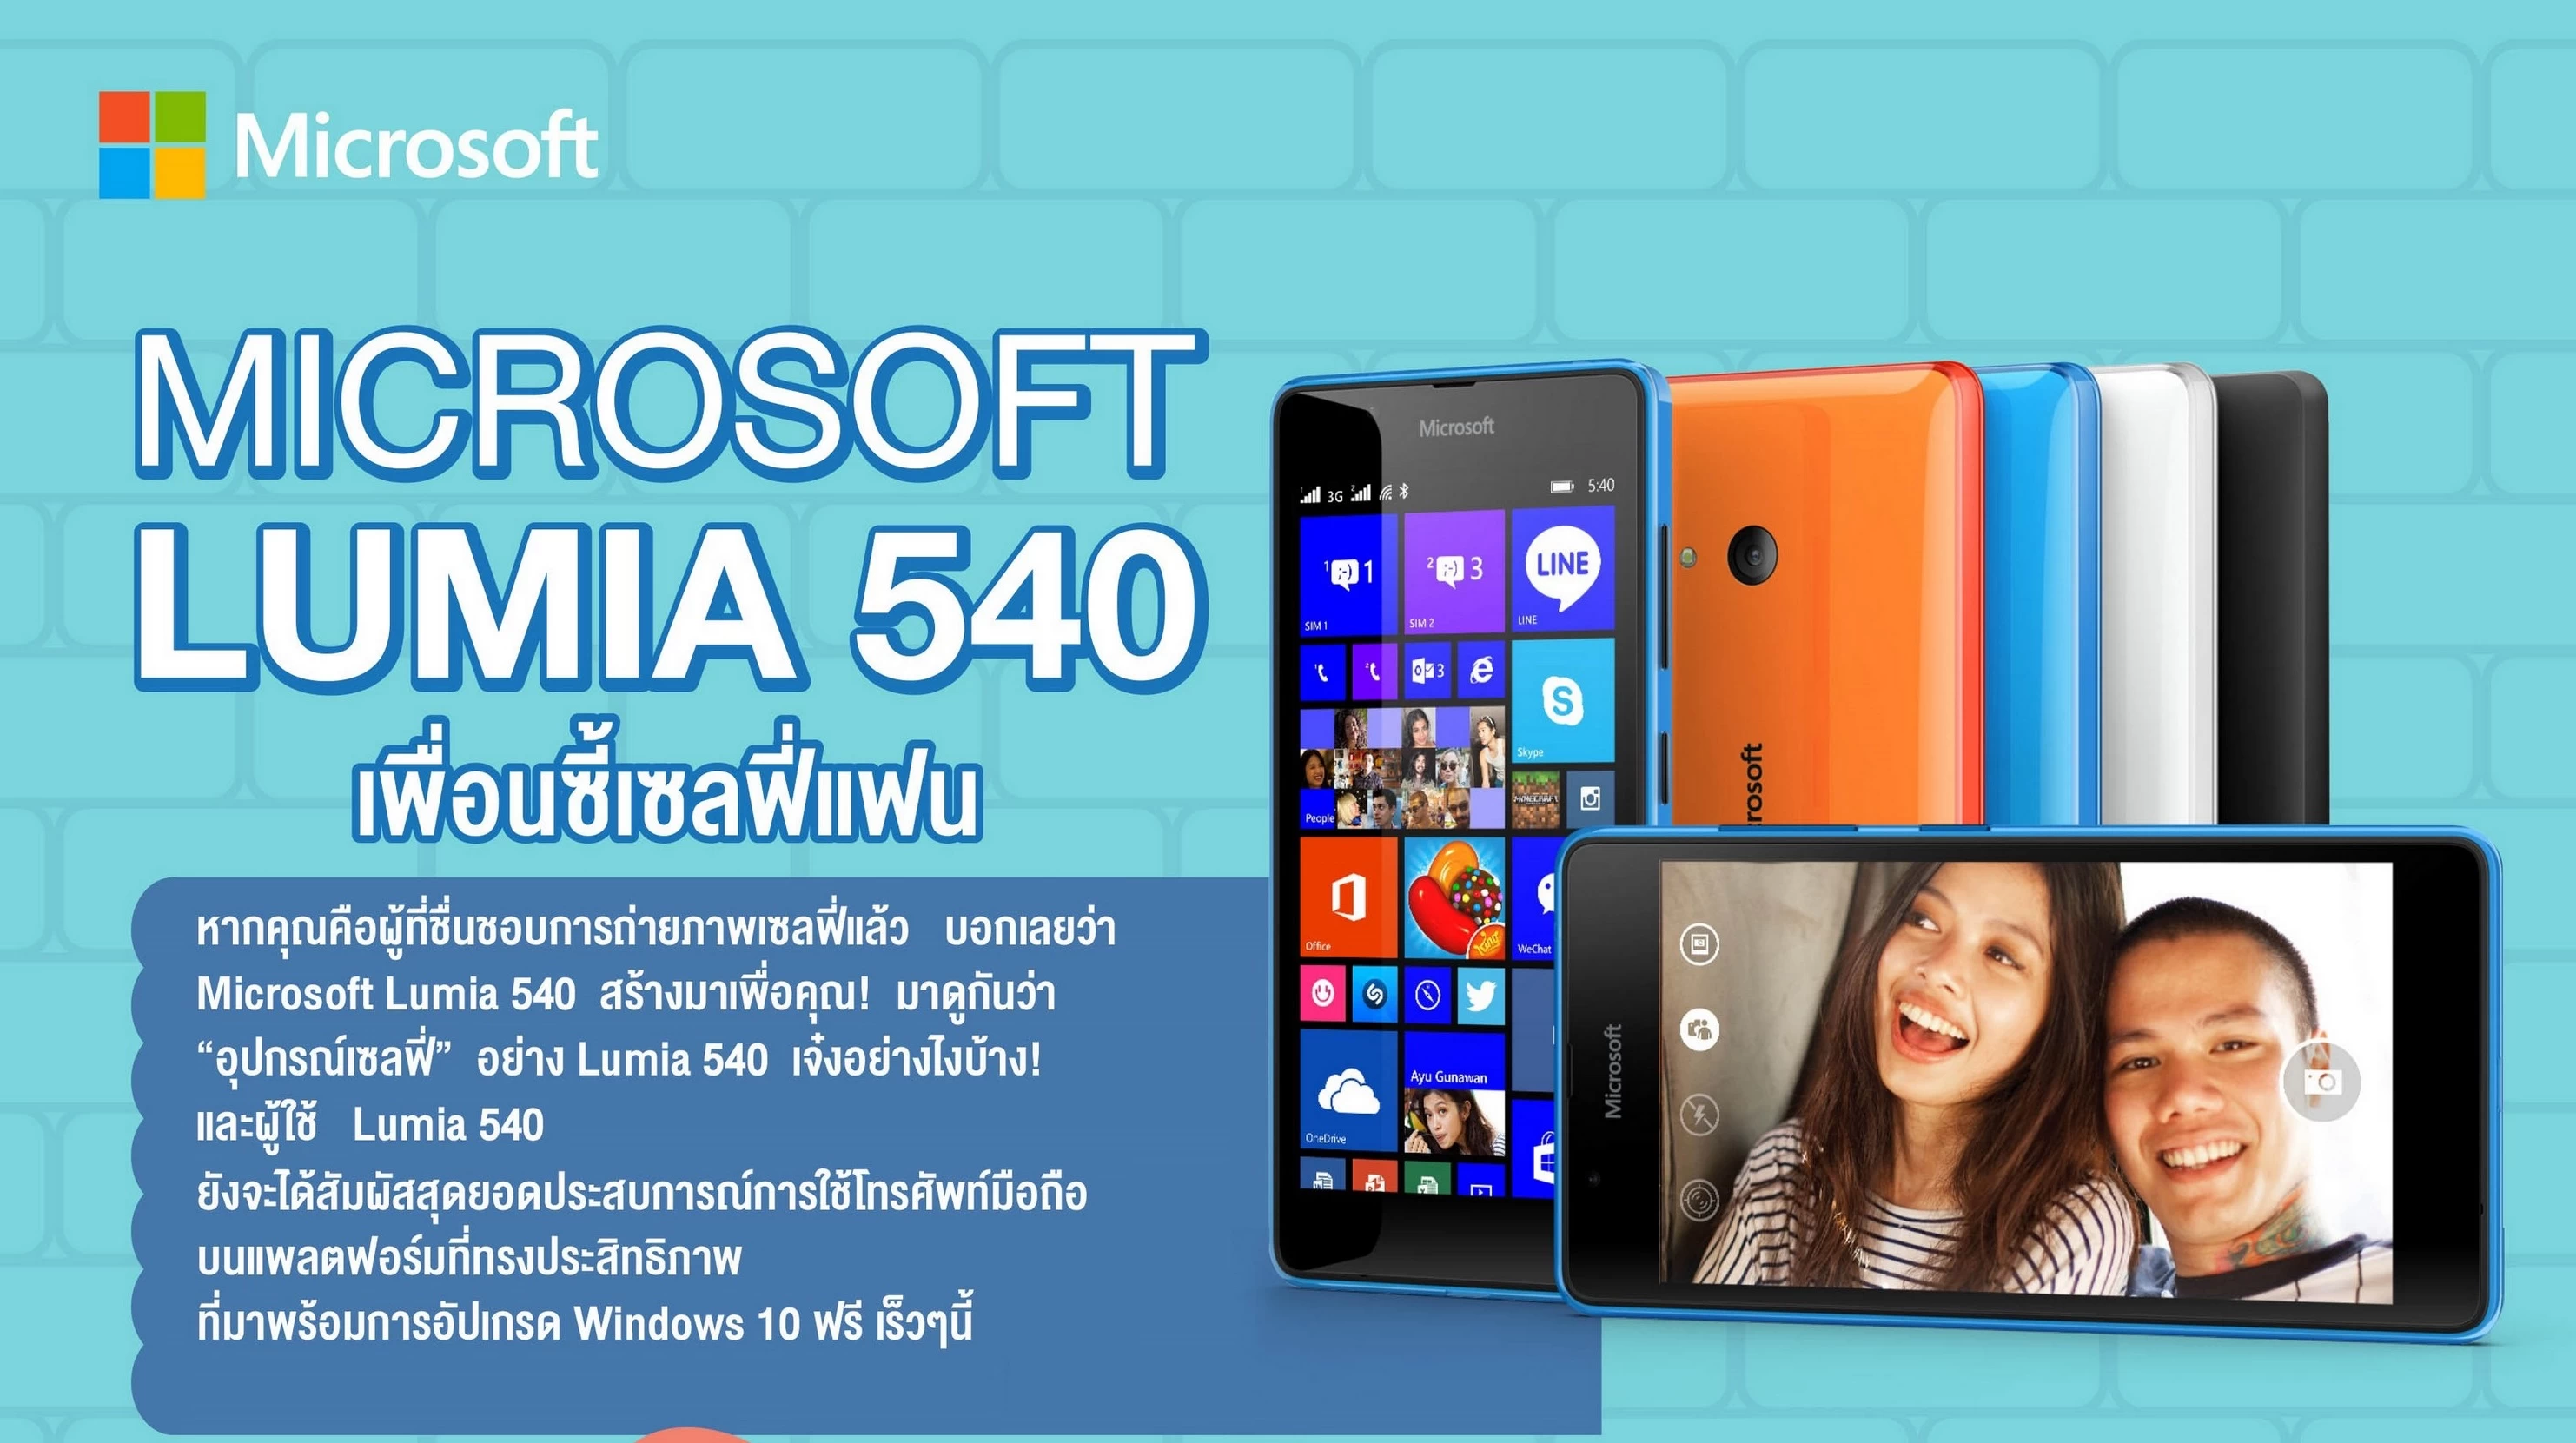 Infographic Lumia 540 Thai Final1 | Lumia 540 | Lumia Infographic : สัมผัสที่สุดของประสบการณ์การใช้โทรศัพท์มือถือกับ Lumia สองรุ่น สองสไตล์ ที่มาพร้อมการอัปเกรด Windows 10 ฟรี เร็วๆ นี้